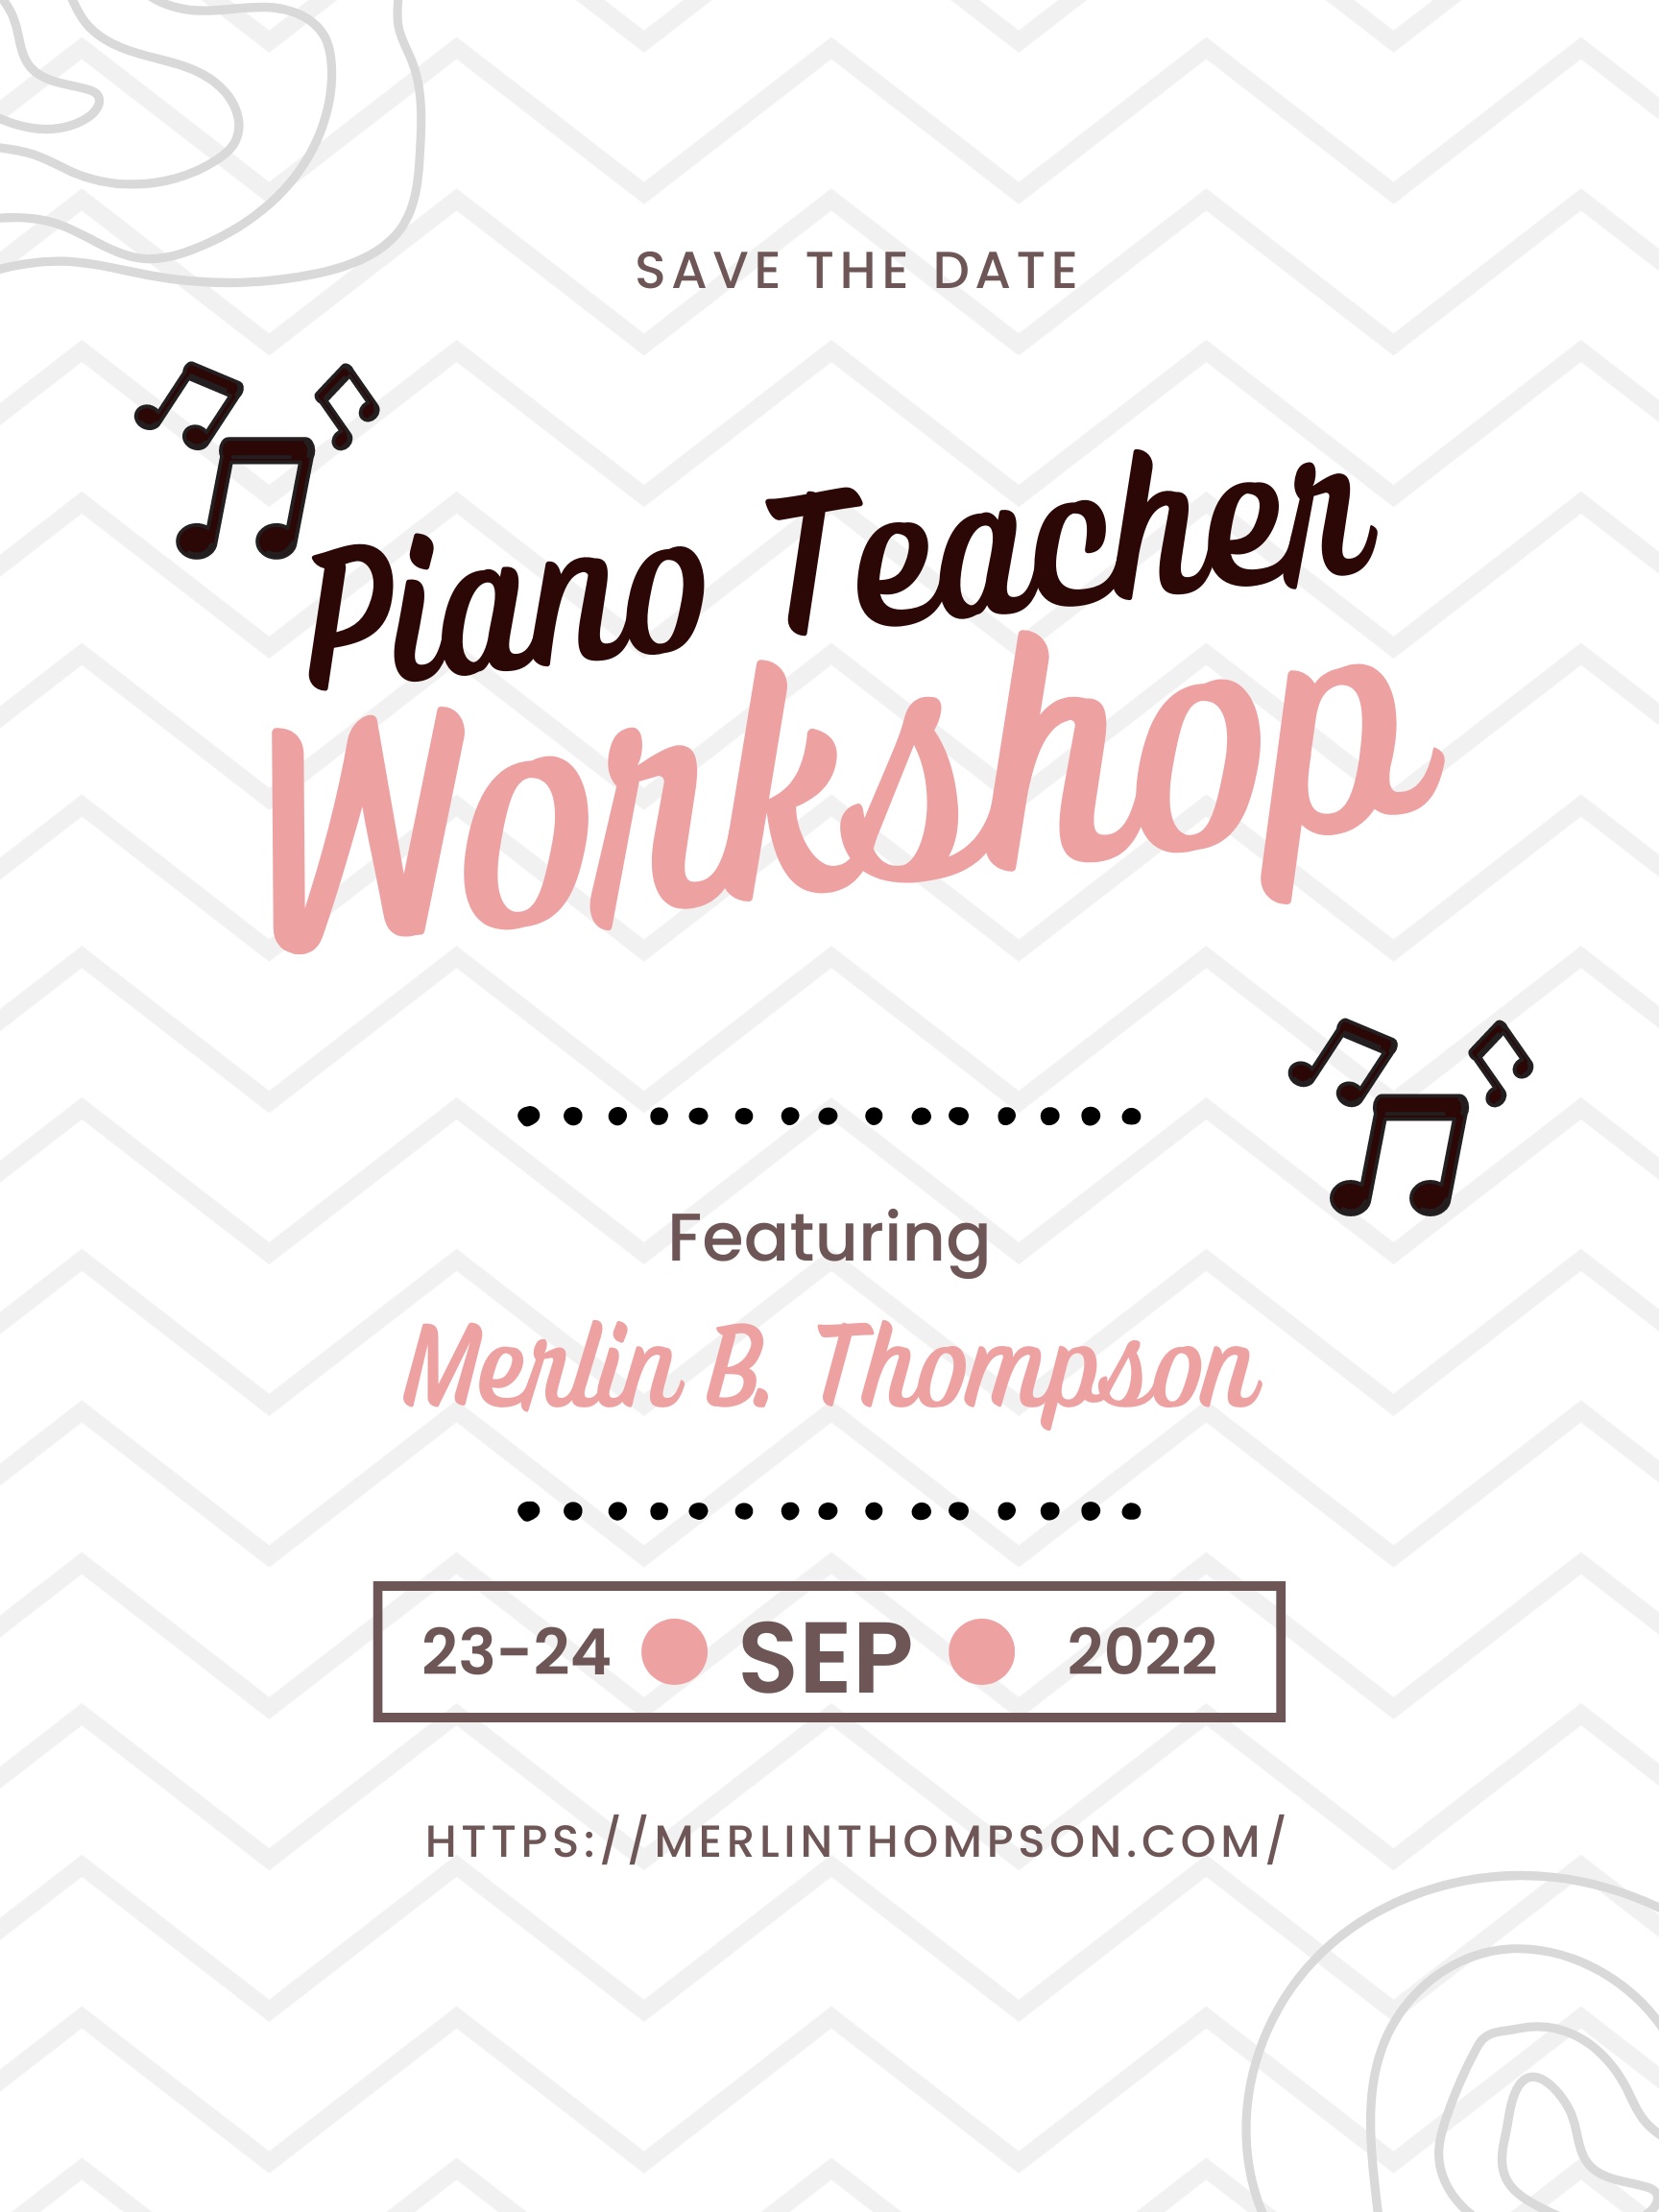 Music Pedagogy Workshop Featuring Merlin B. Thompson 2022